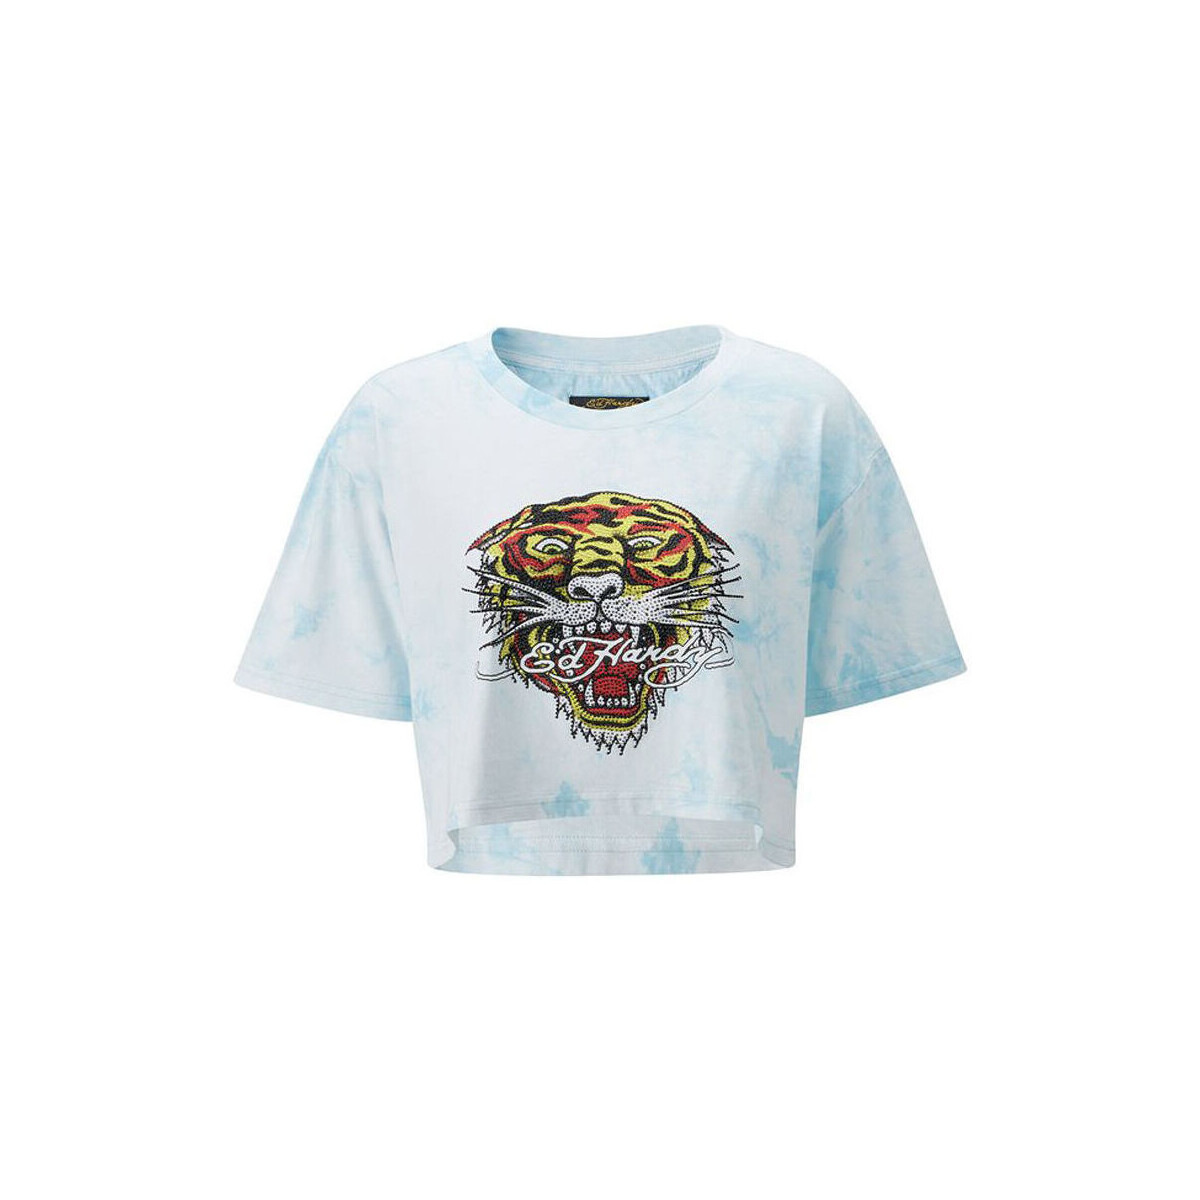 textil Dame T-shirts & poloer Ed Hardy Los tigre grop top turquesa Blå